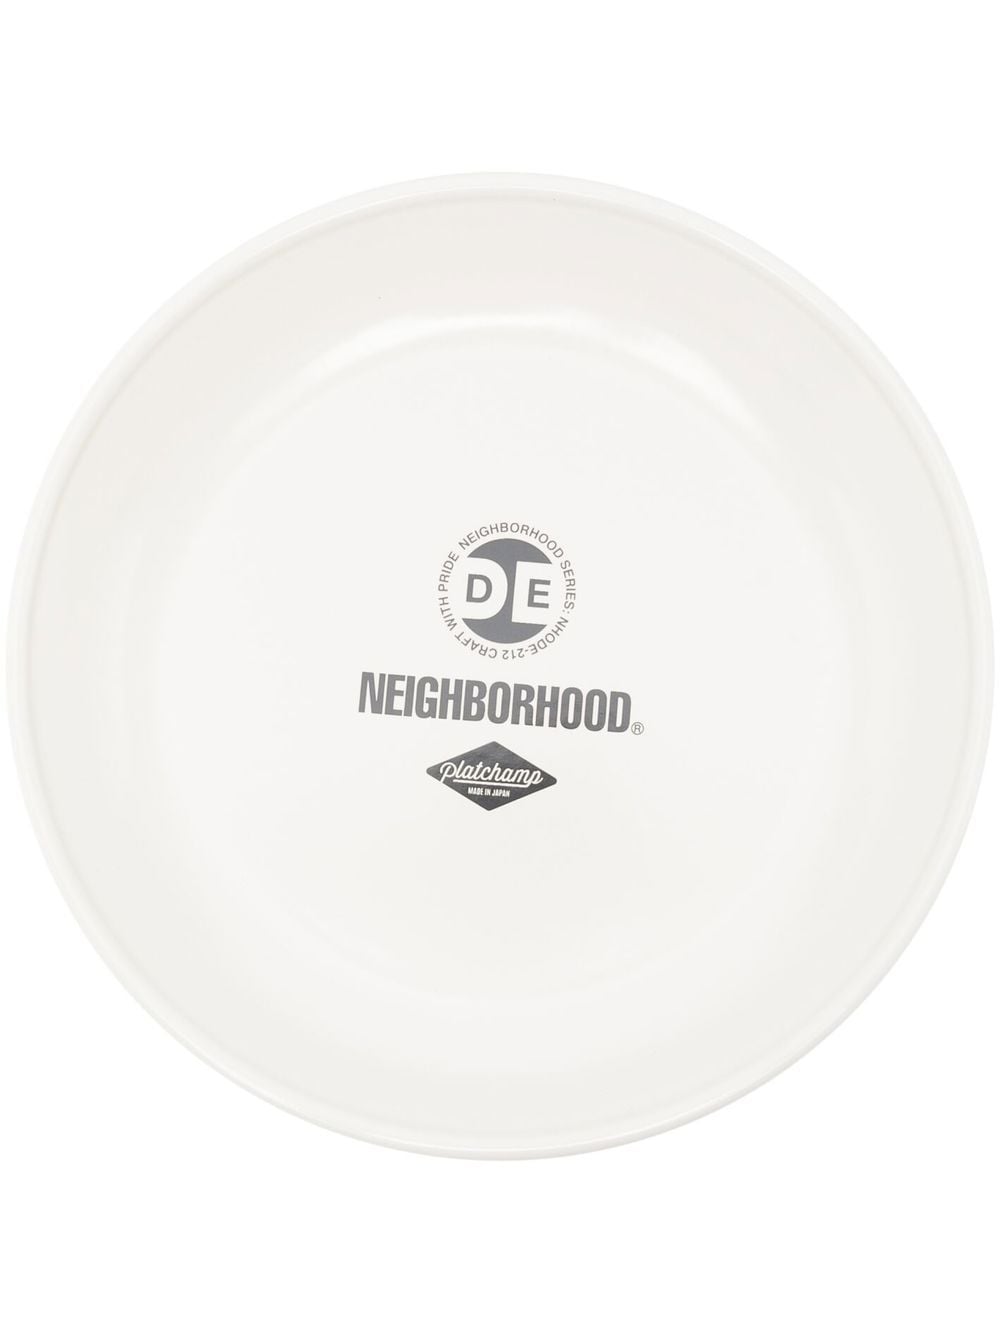 Neighborhood X Platchamp Ode 20 Plate In Neutrals